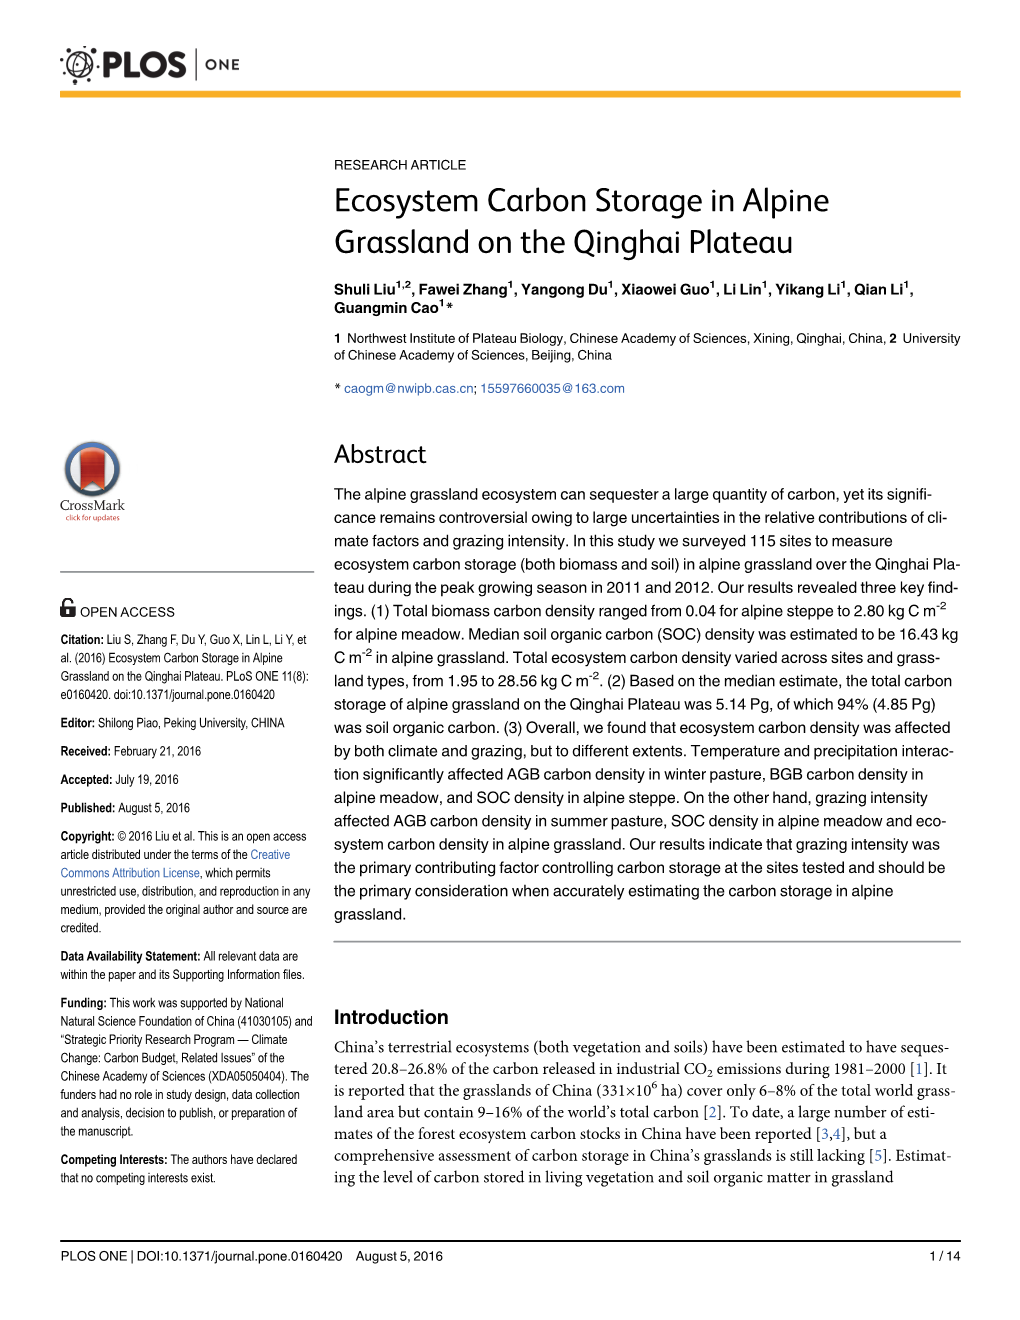 Ecosystem Carbon Storage in Alpine Grassland on the Qinghai Plateau